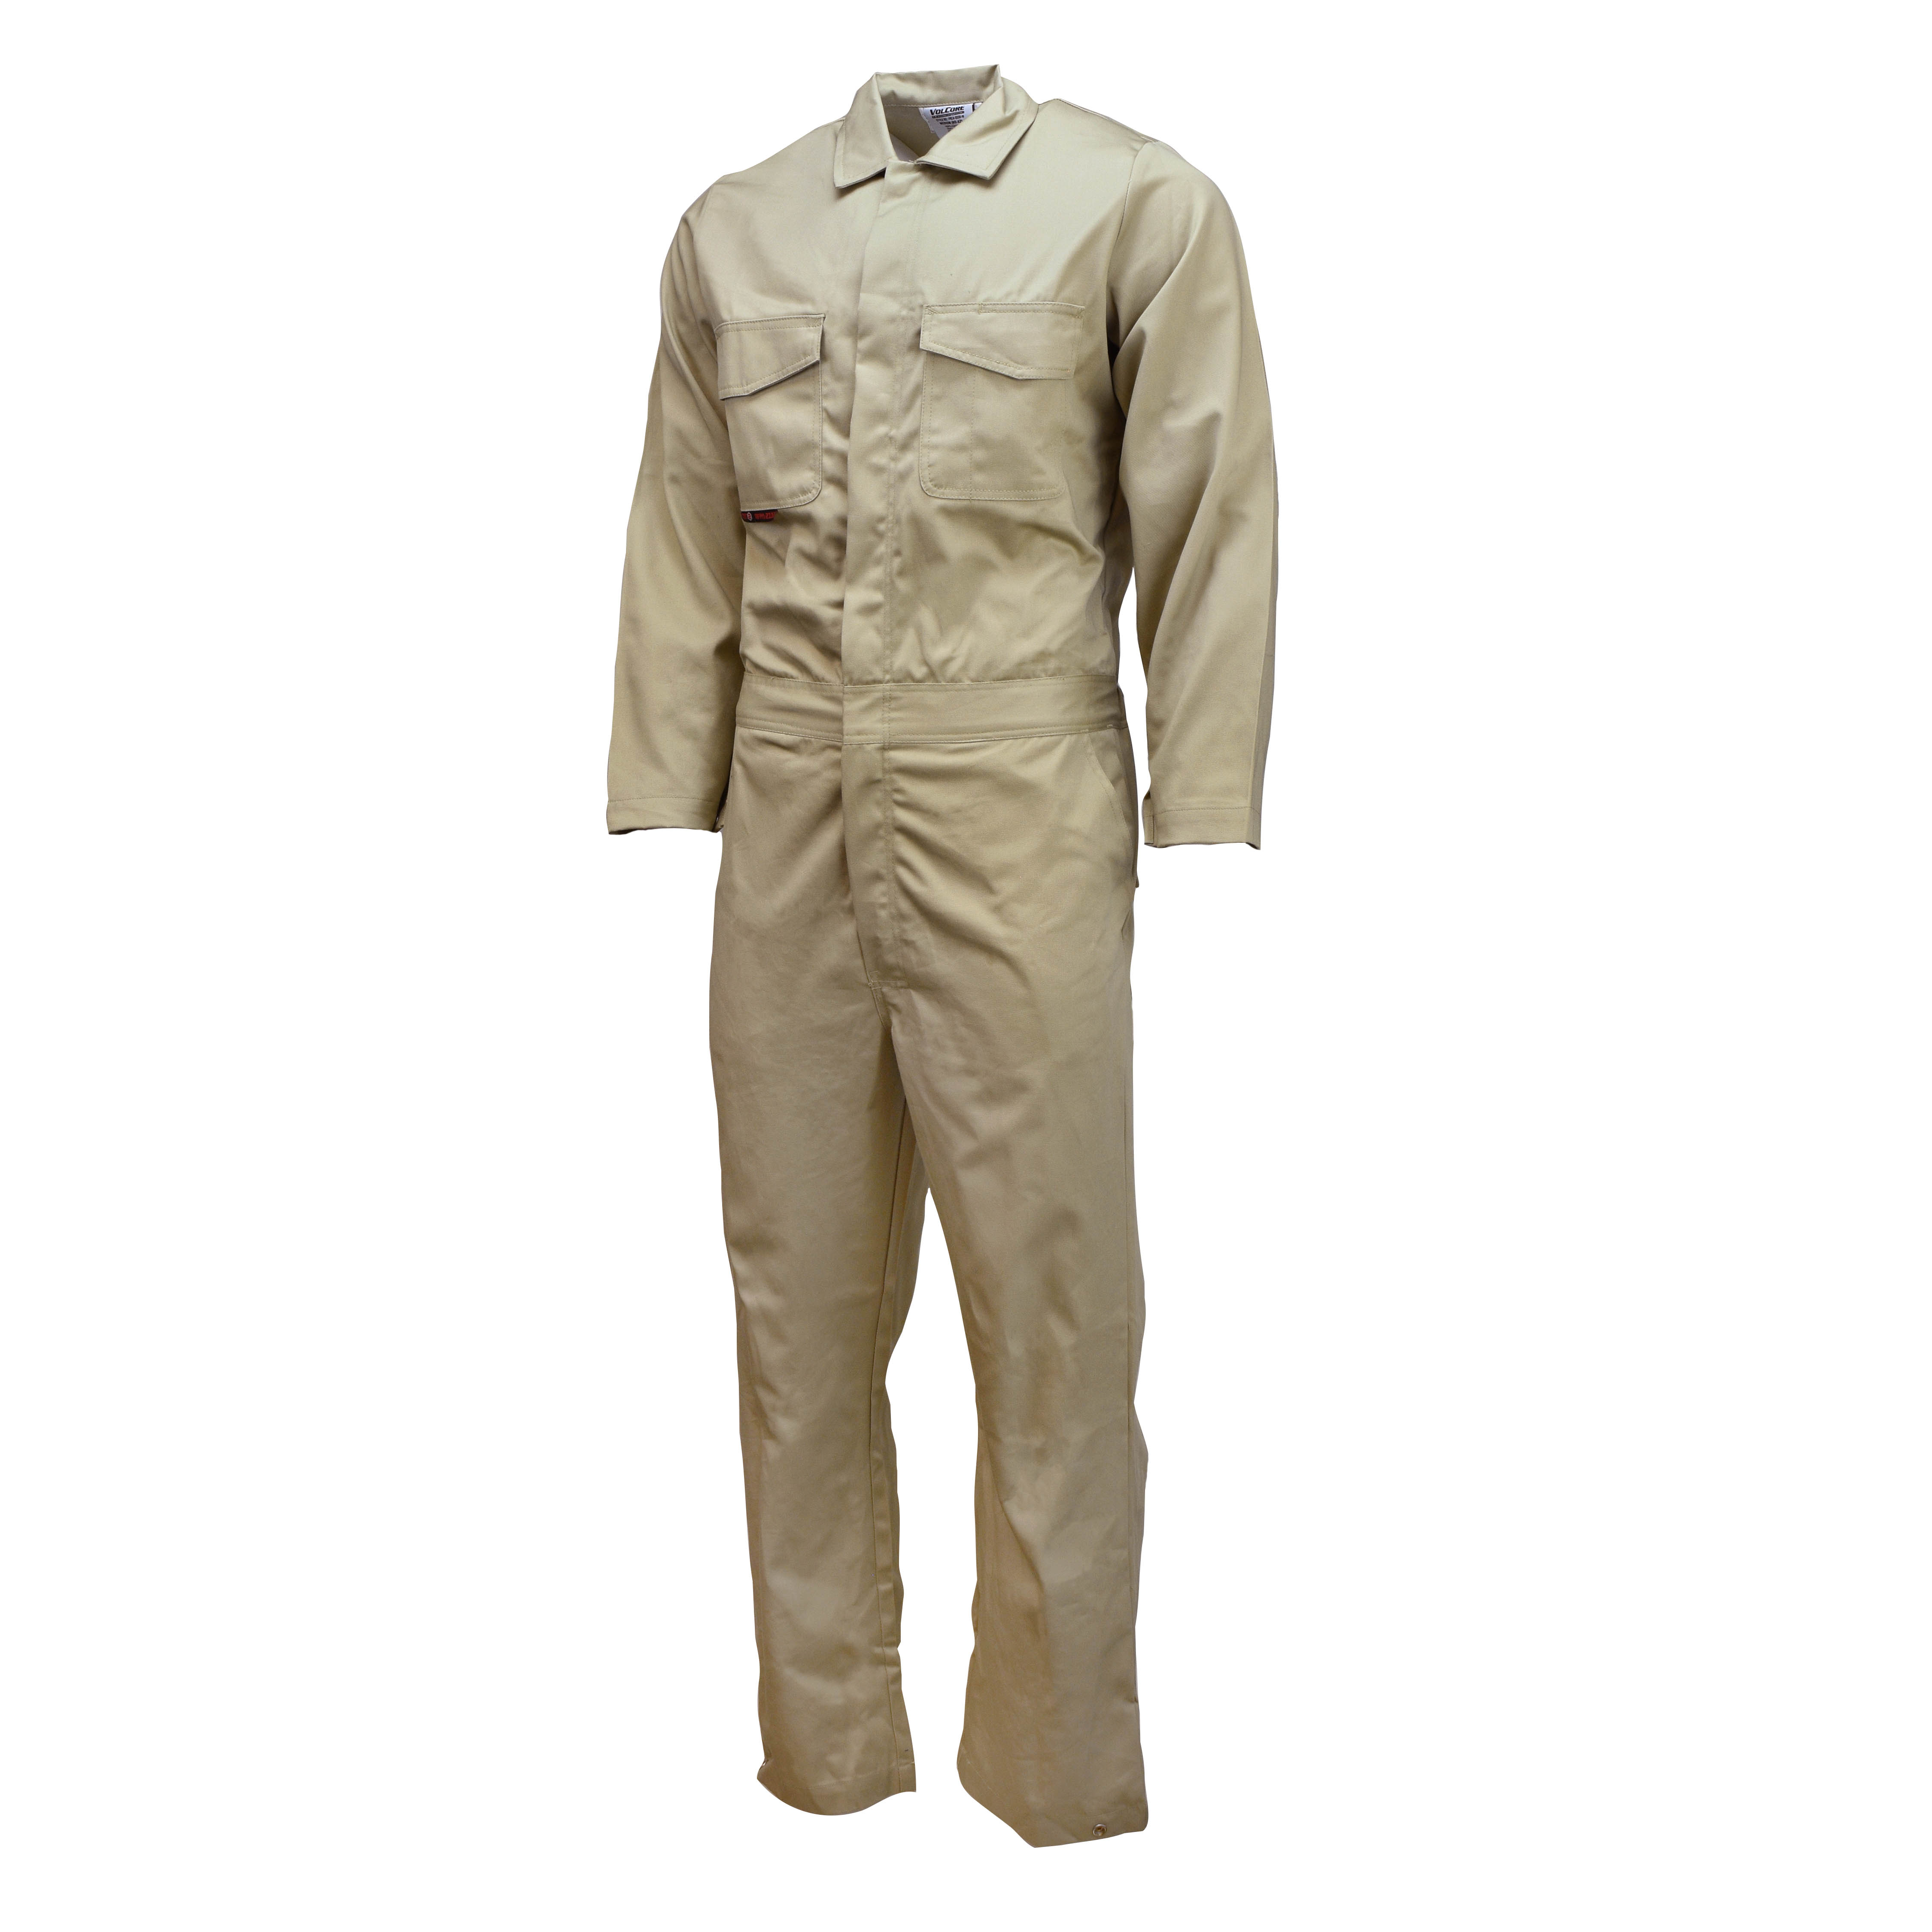 FRCA-003 VolCore™ Cotton FR Coverall - Khaki - Size 3X